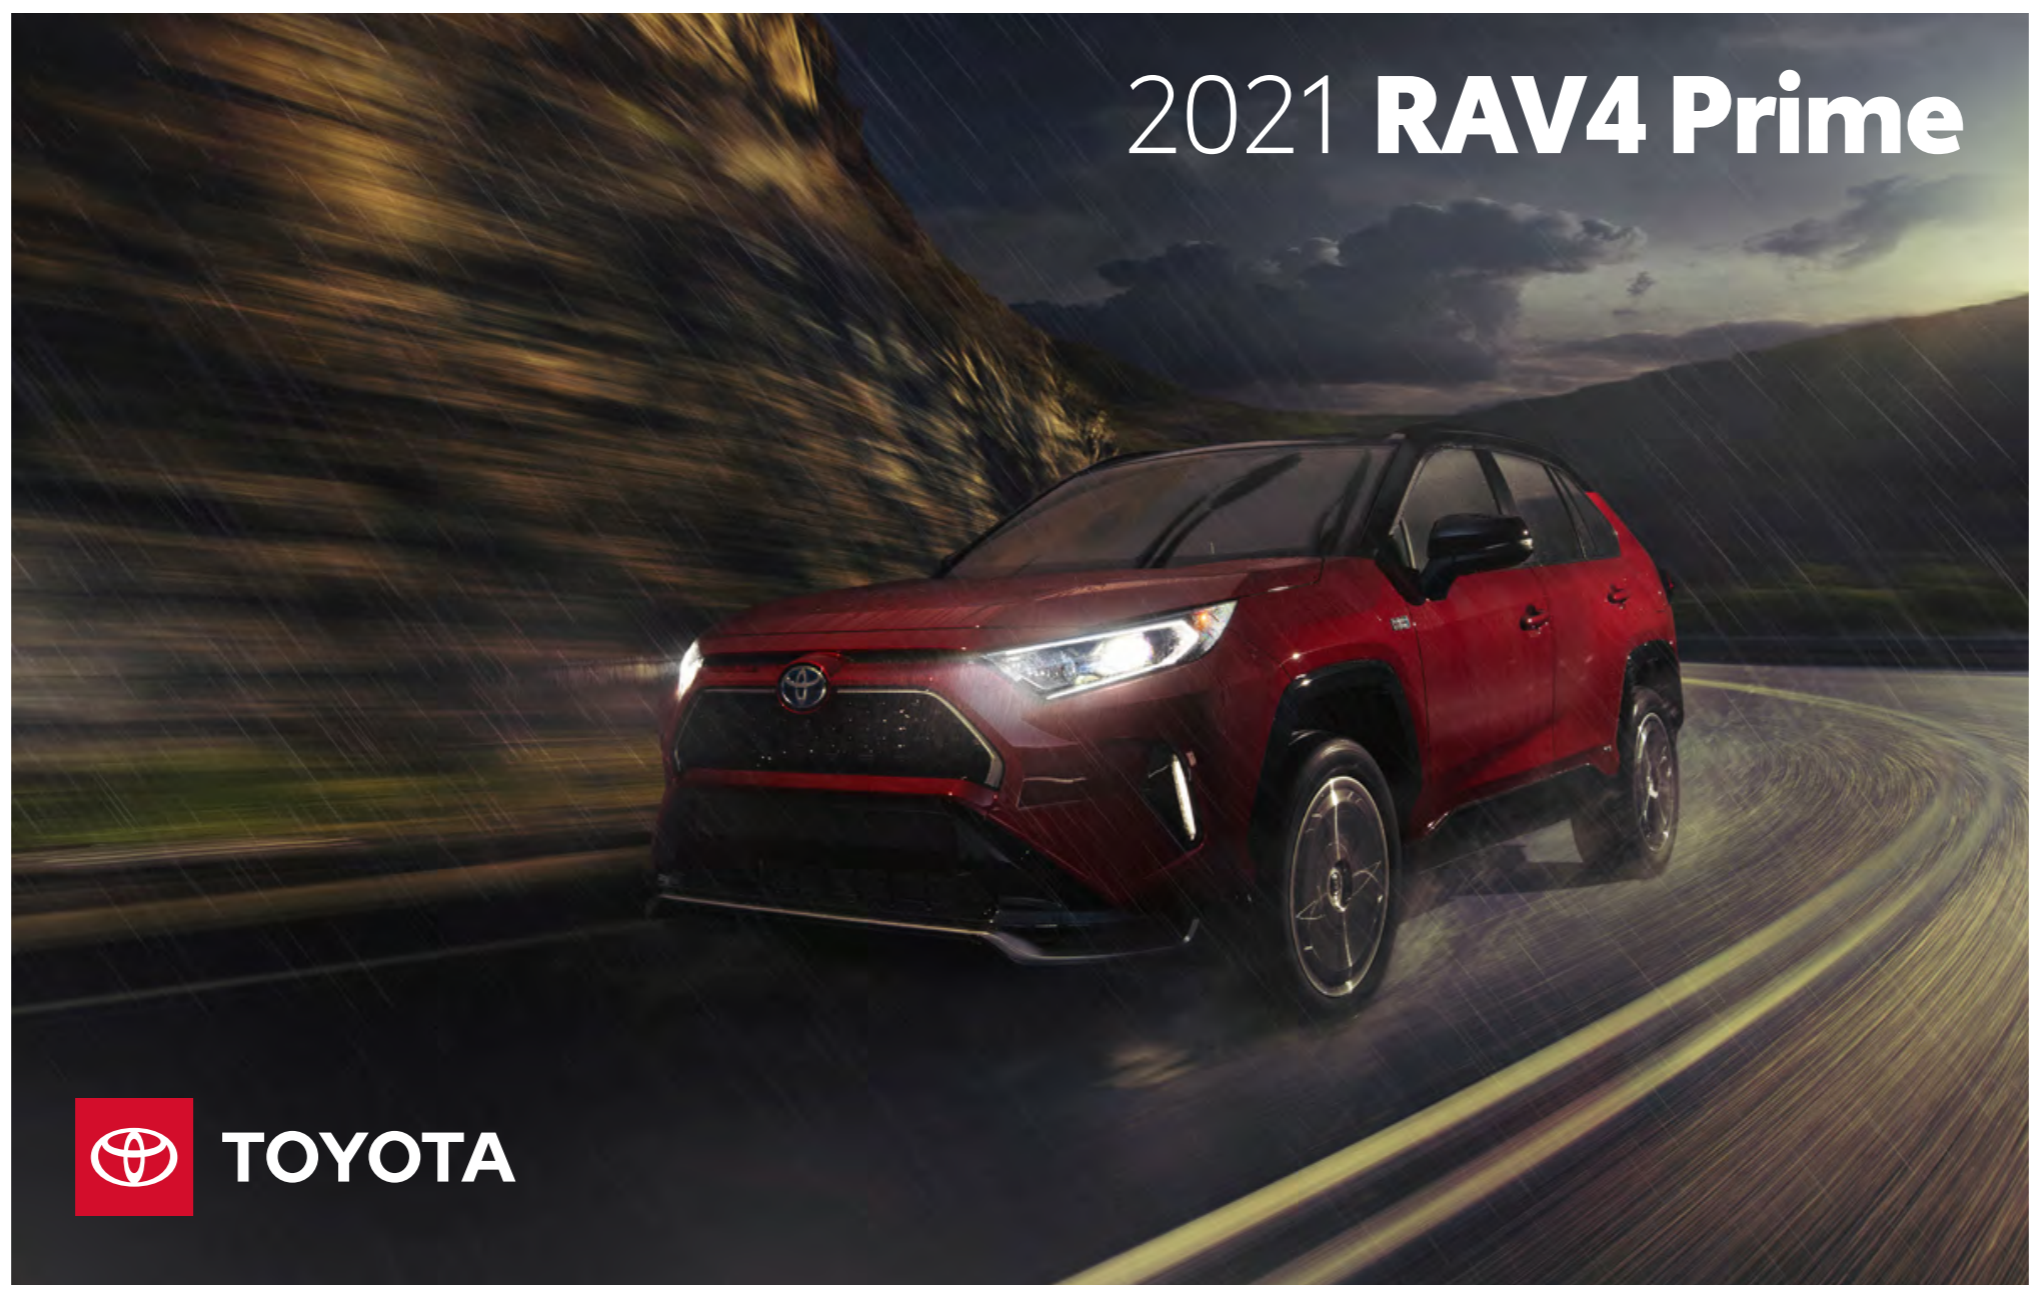 New 2021 Toyota RAV4 Prime trim at Falmouth Toyota, Bourne, MA - Cape Cod Toyota Dealership